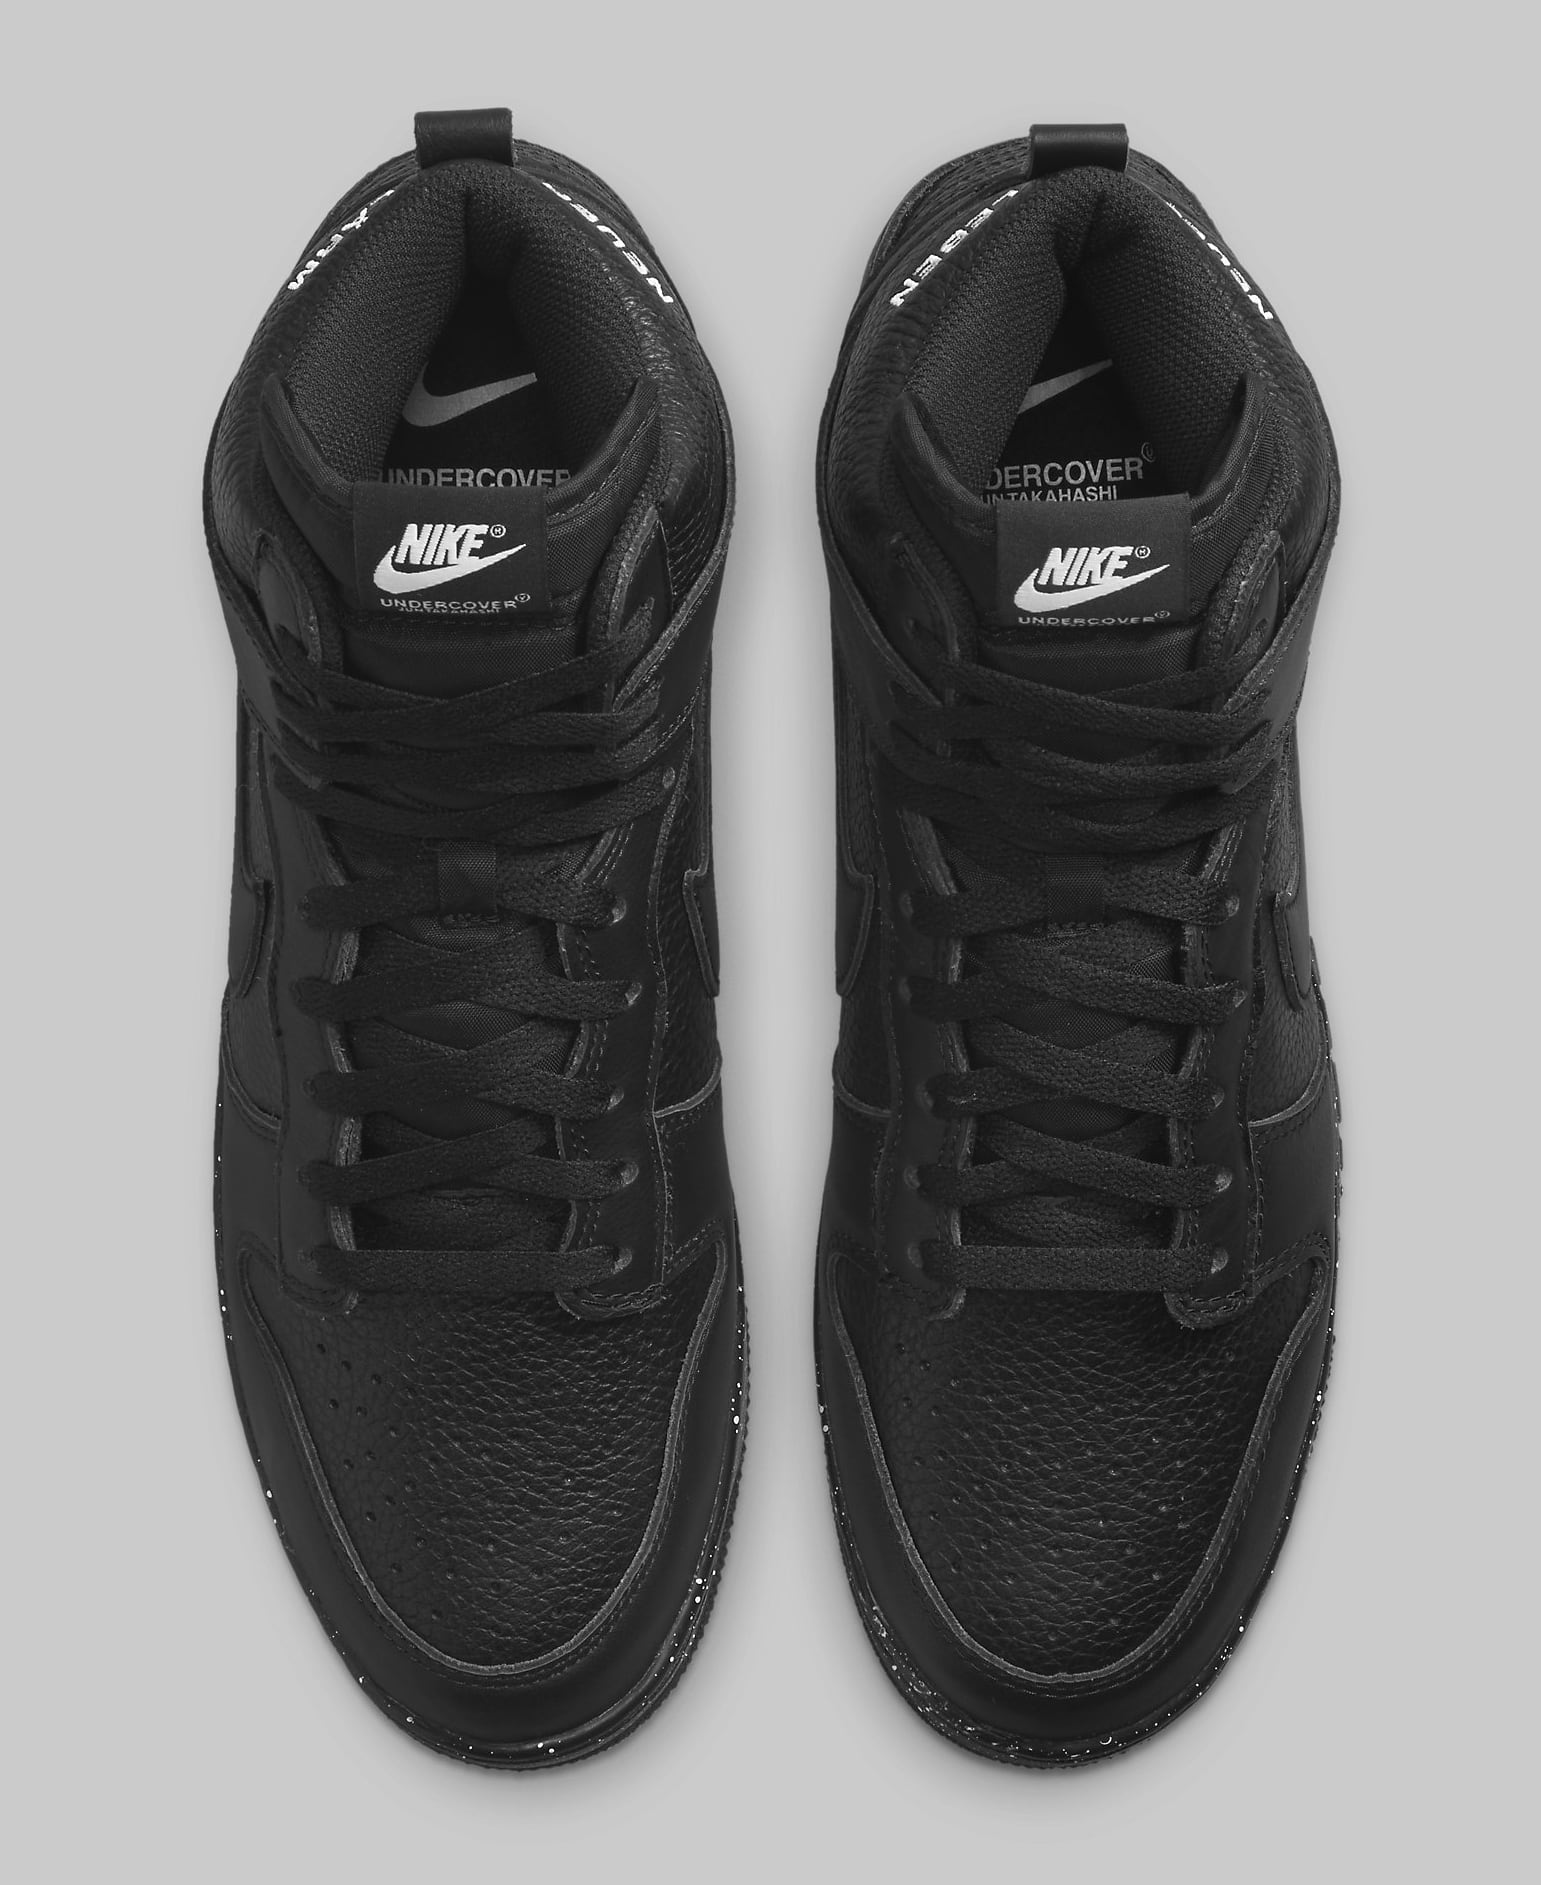 Undercover x Nike Dunk High 'Black' DQ4121 001 Top